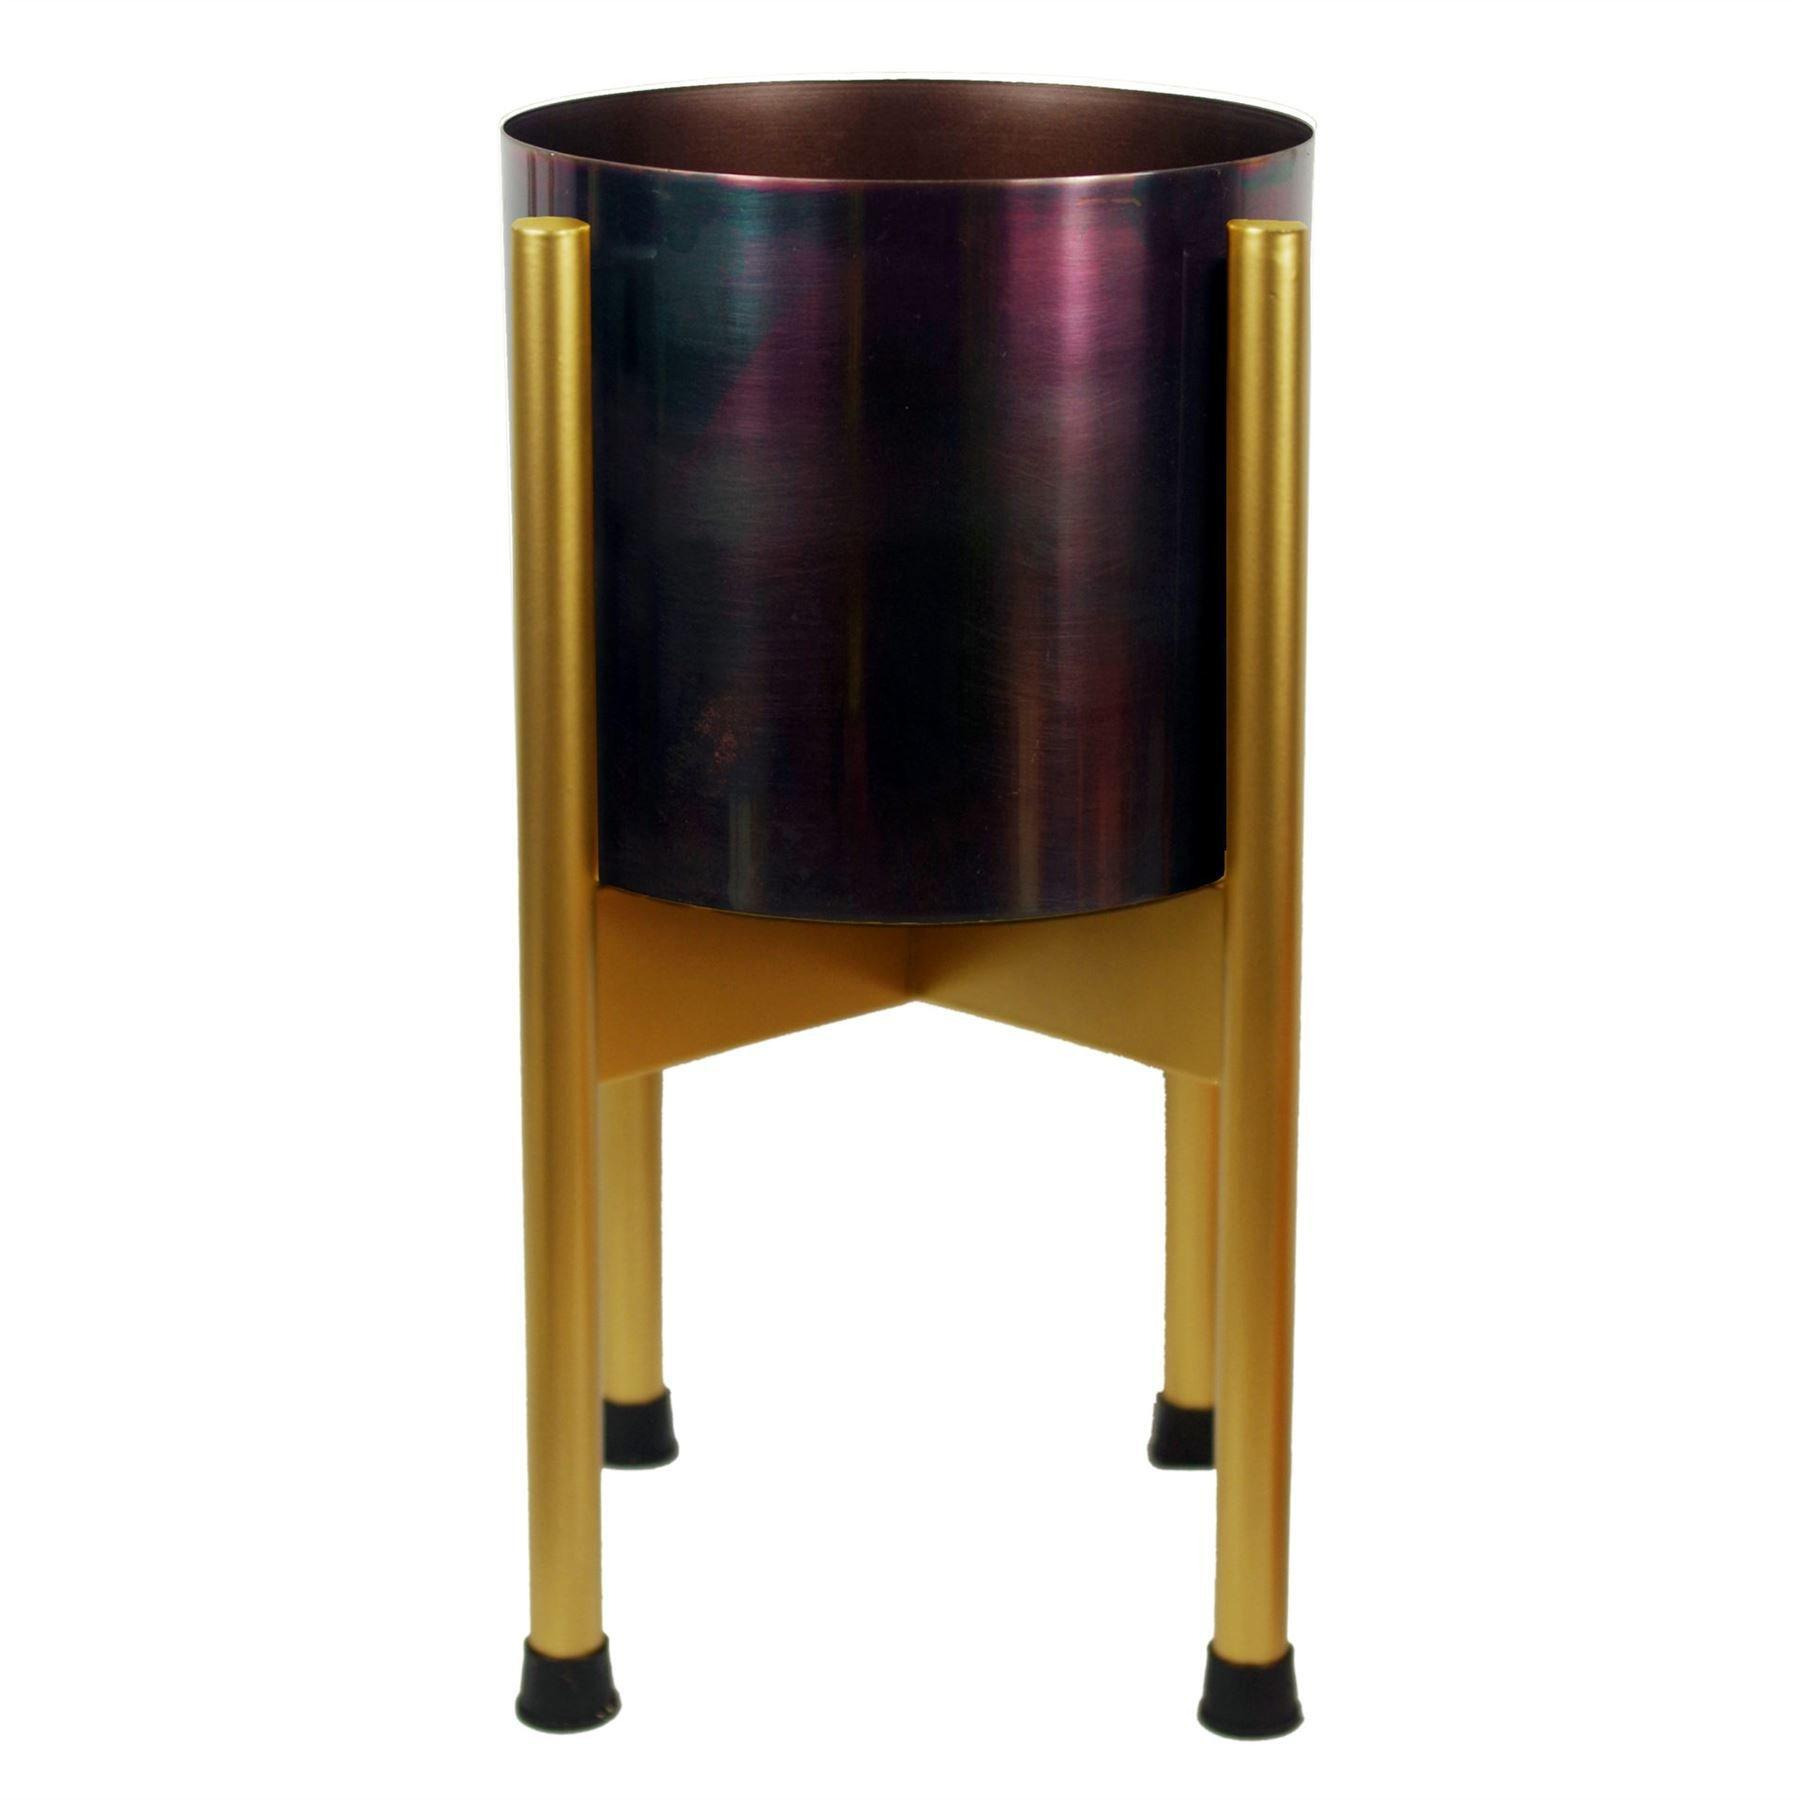 Medium Gold Stand with Iridescent Rainbow Metal Planter 38.5cm x 18cm - image 1